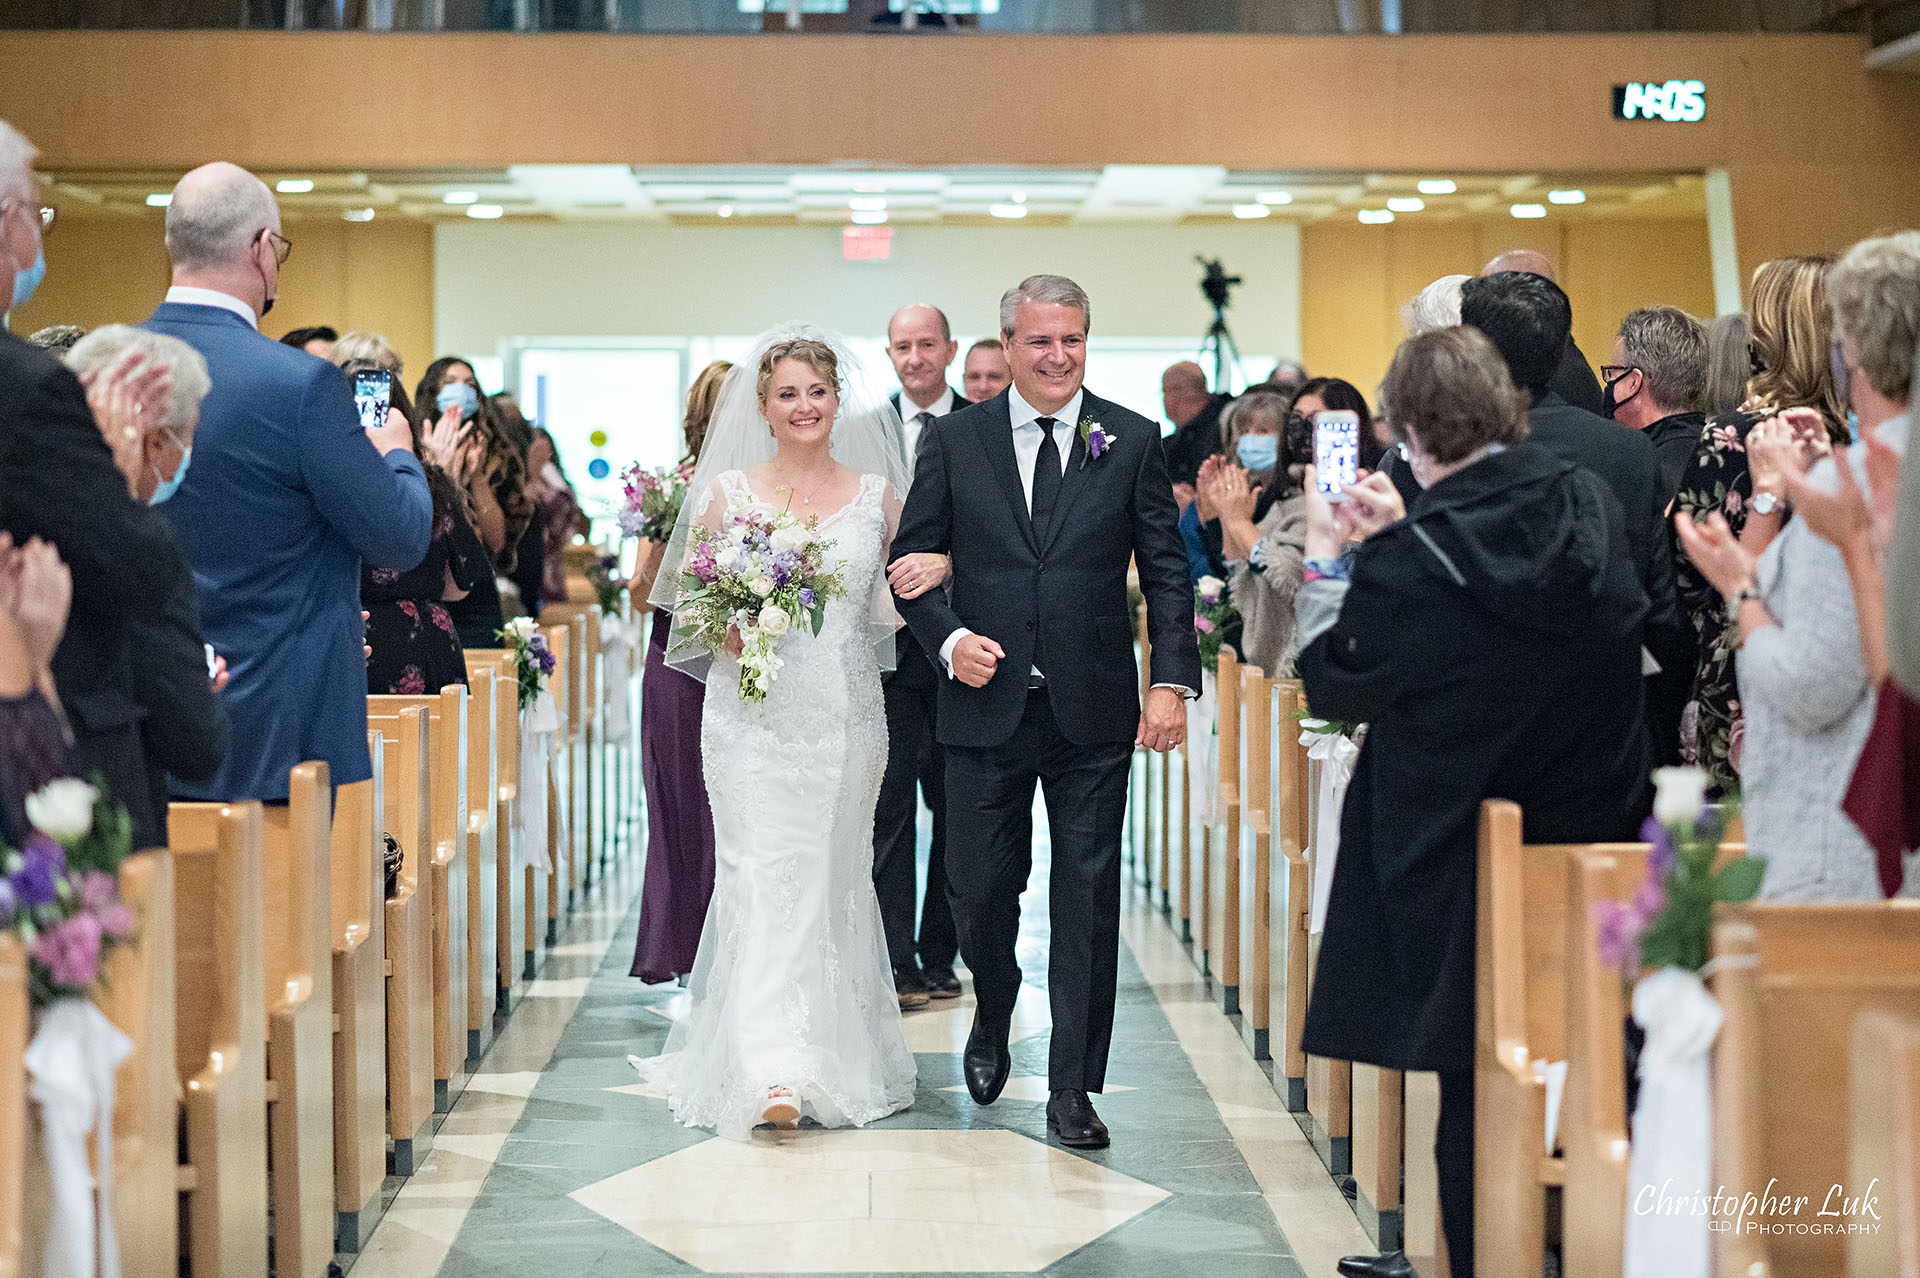 Christopher Luk Toronto Wedding Photographer Natural Candid Photojournalistic Tyndale Chapel Church Ceremony Bride Groom Celebrate Celebration Recessional  